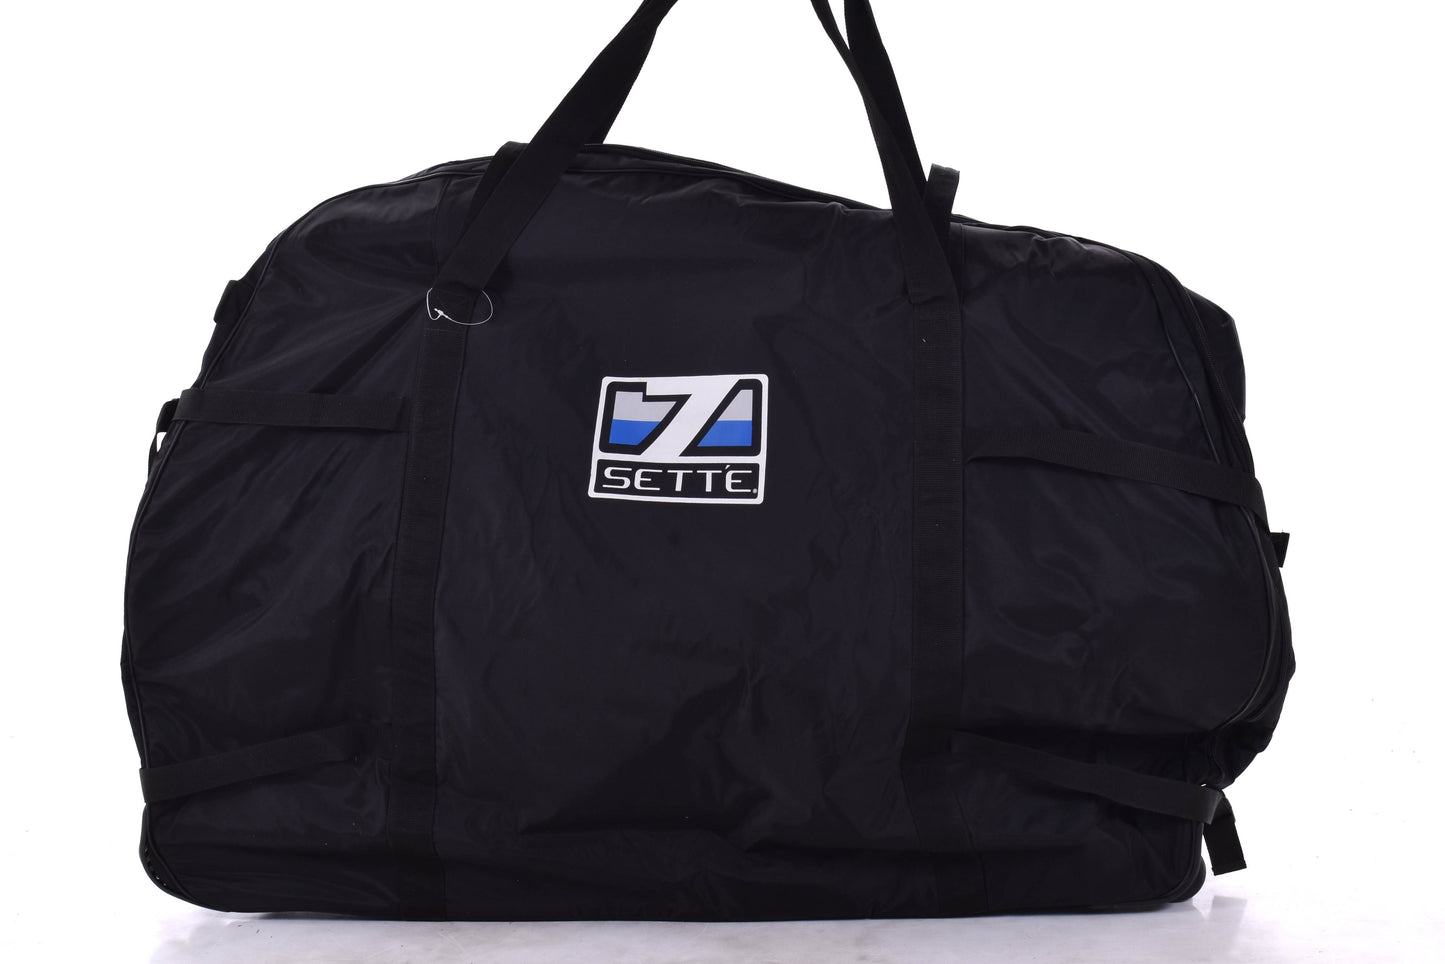 NEW Sette Soft Travel Flight Case/Bag w/ Wheels Large